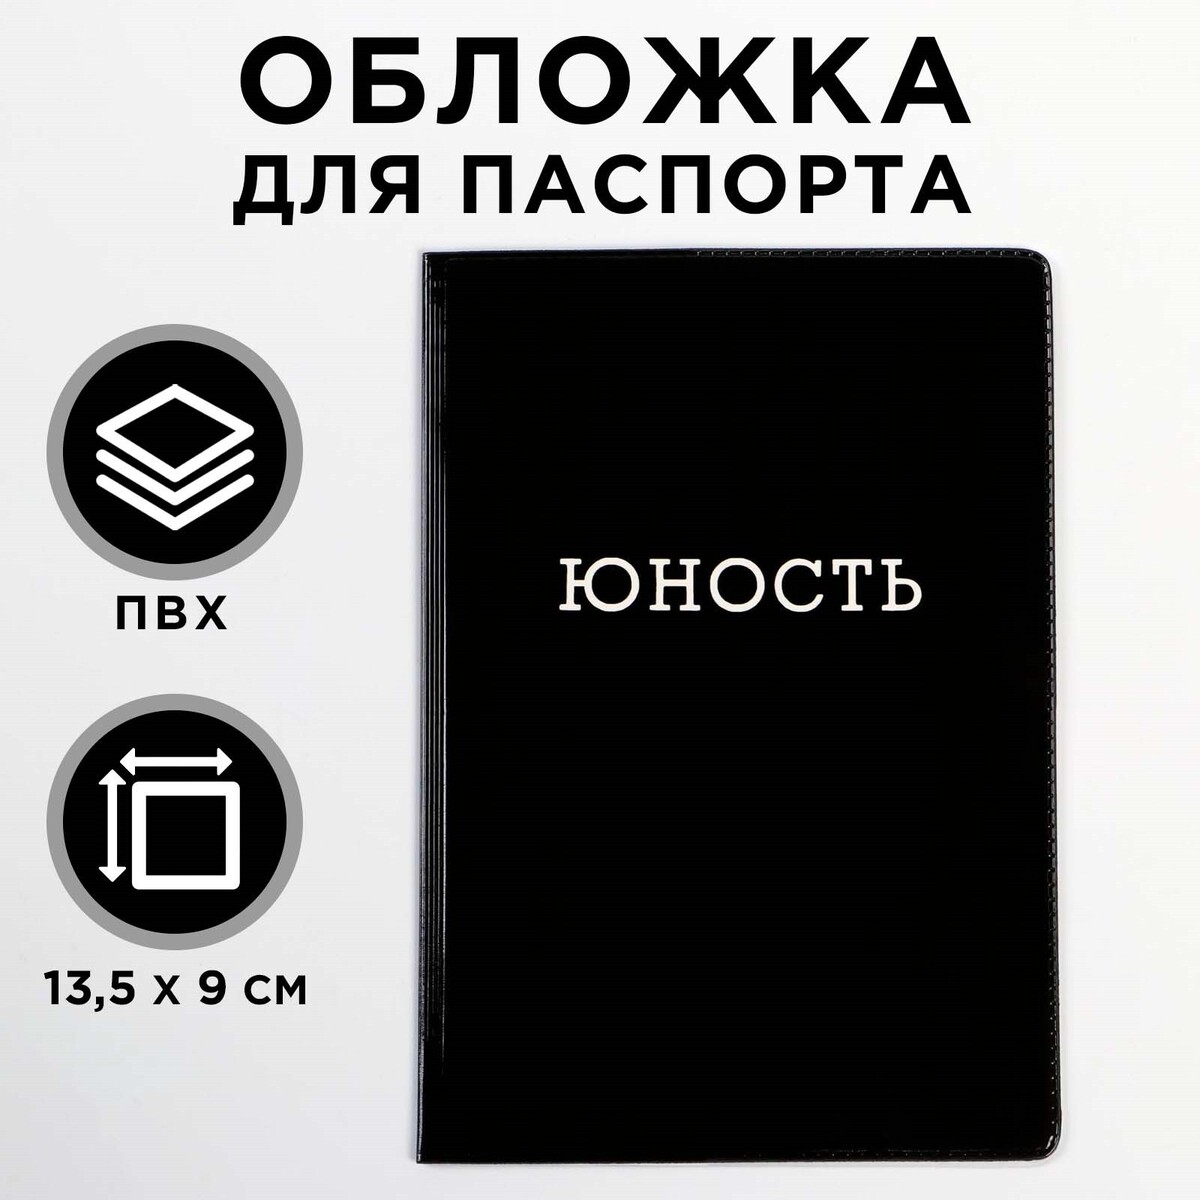 Обложка на паспорт полноцвет